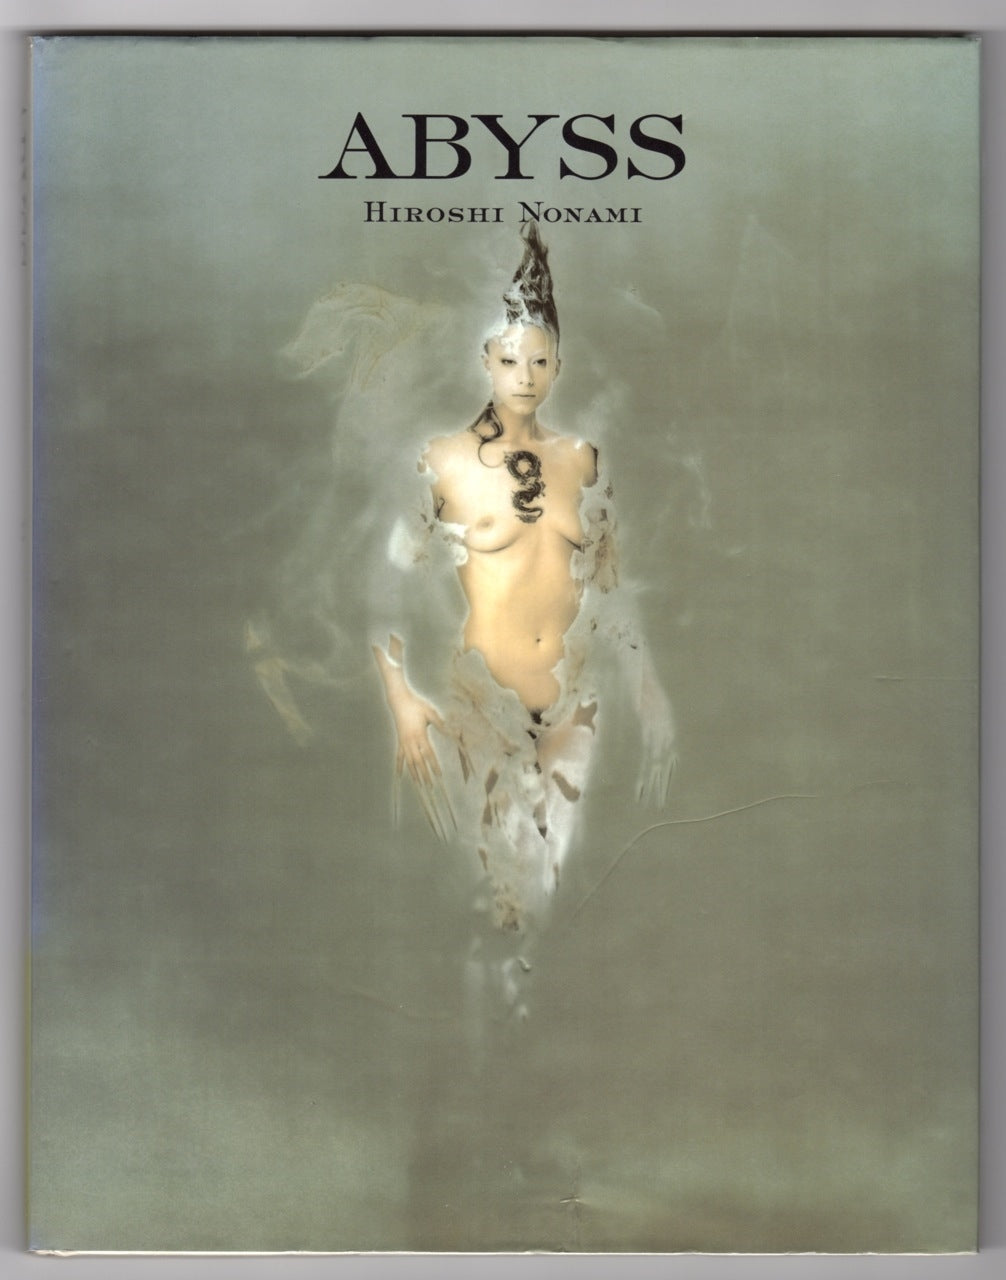 Hiroshi Nonami “Abyss” SIGNED